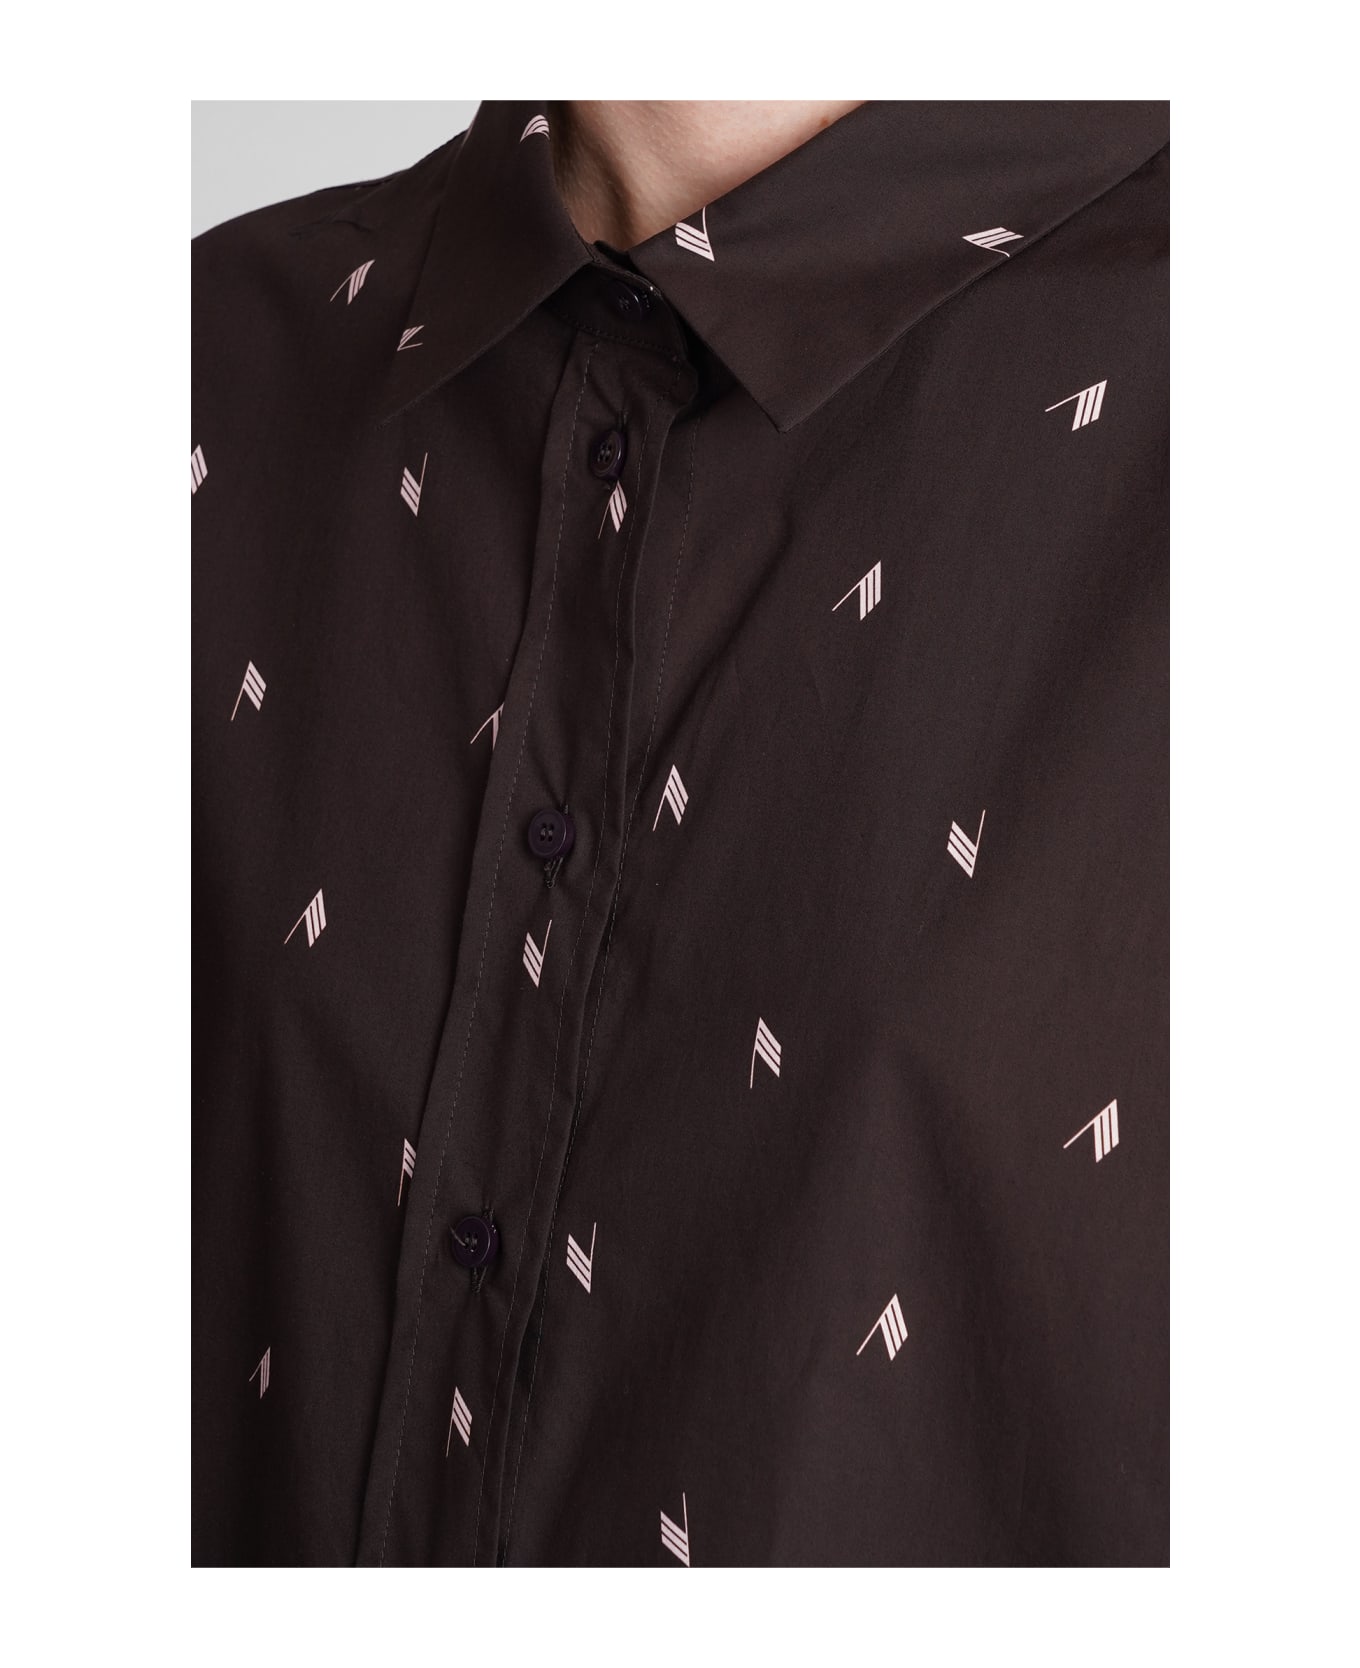 The Attico Diana Shirt In Brown Cotton - brown